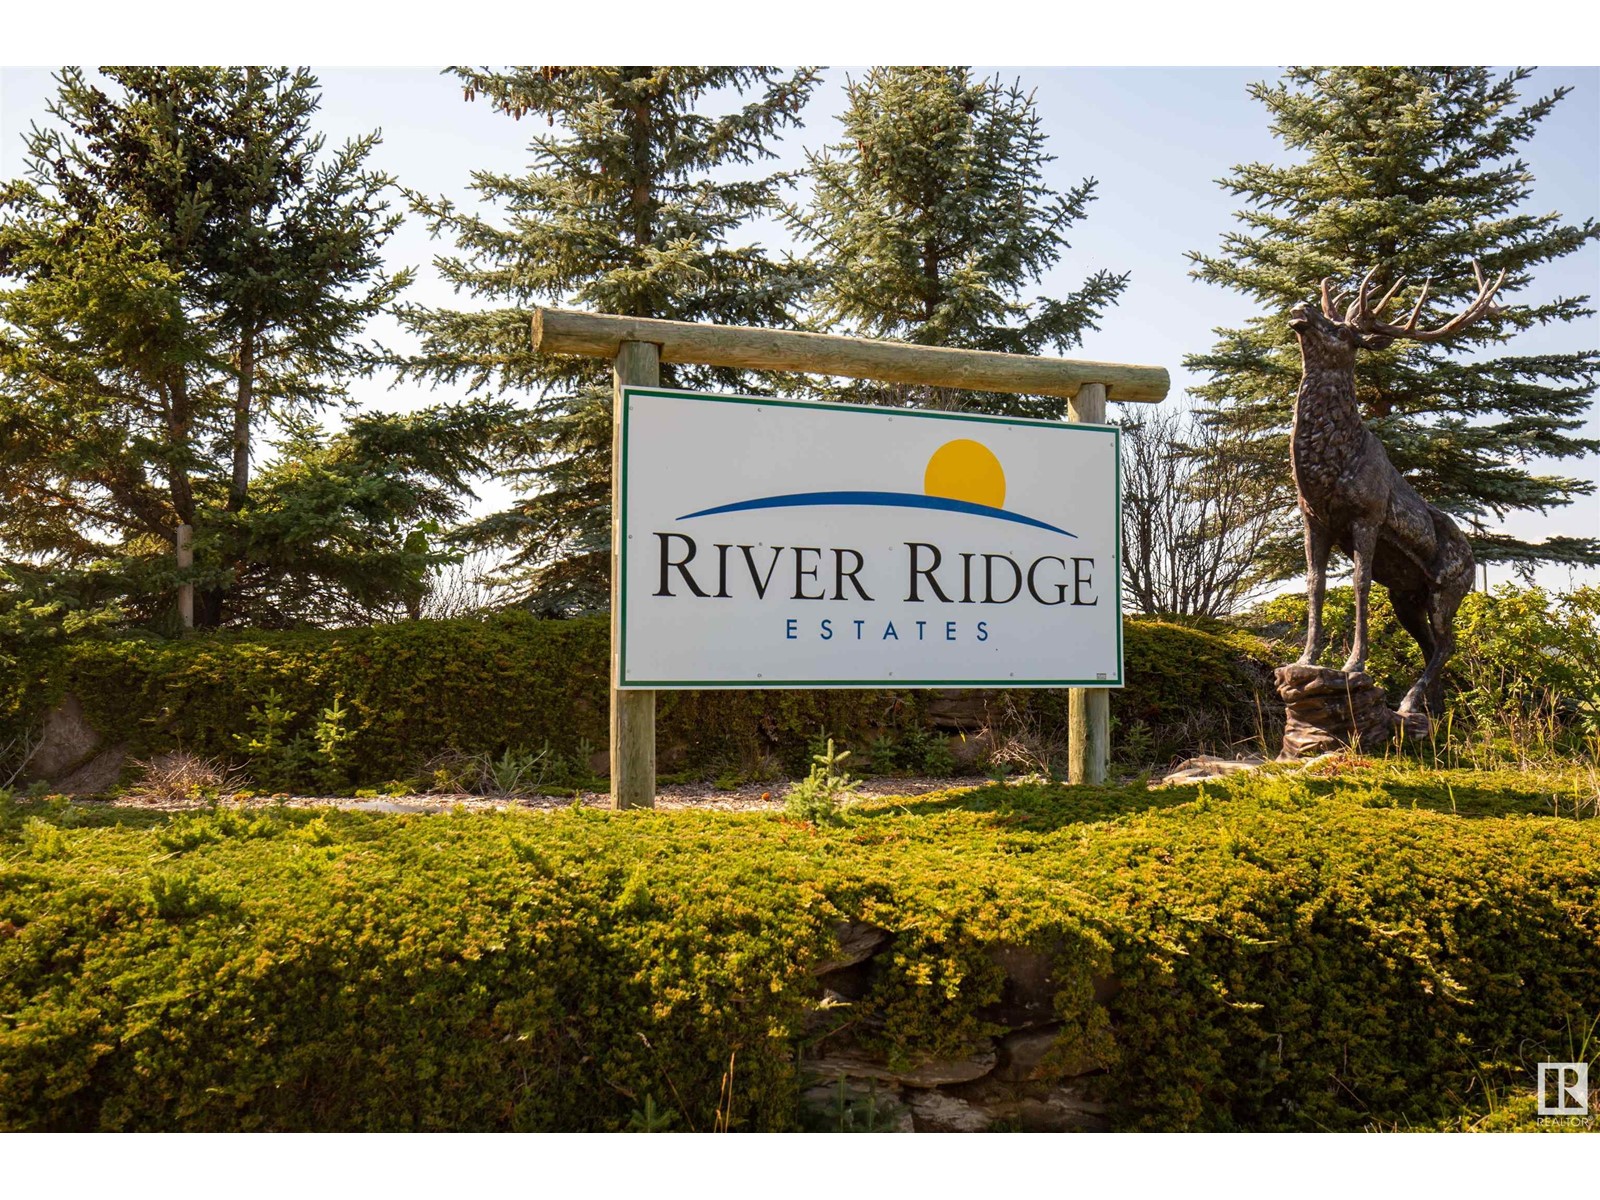 2 River Ridge ES located in Rural Wetaskiwin County, Alberta